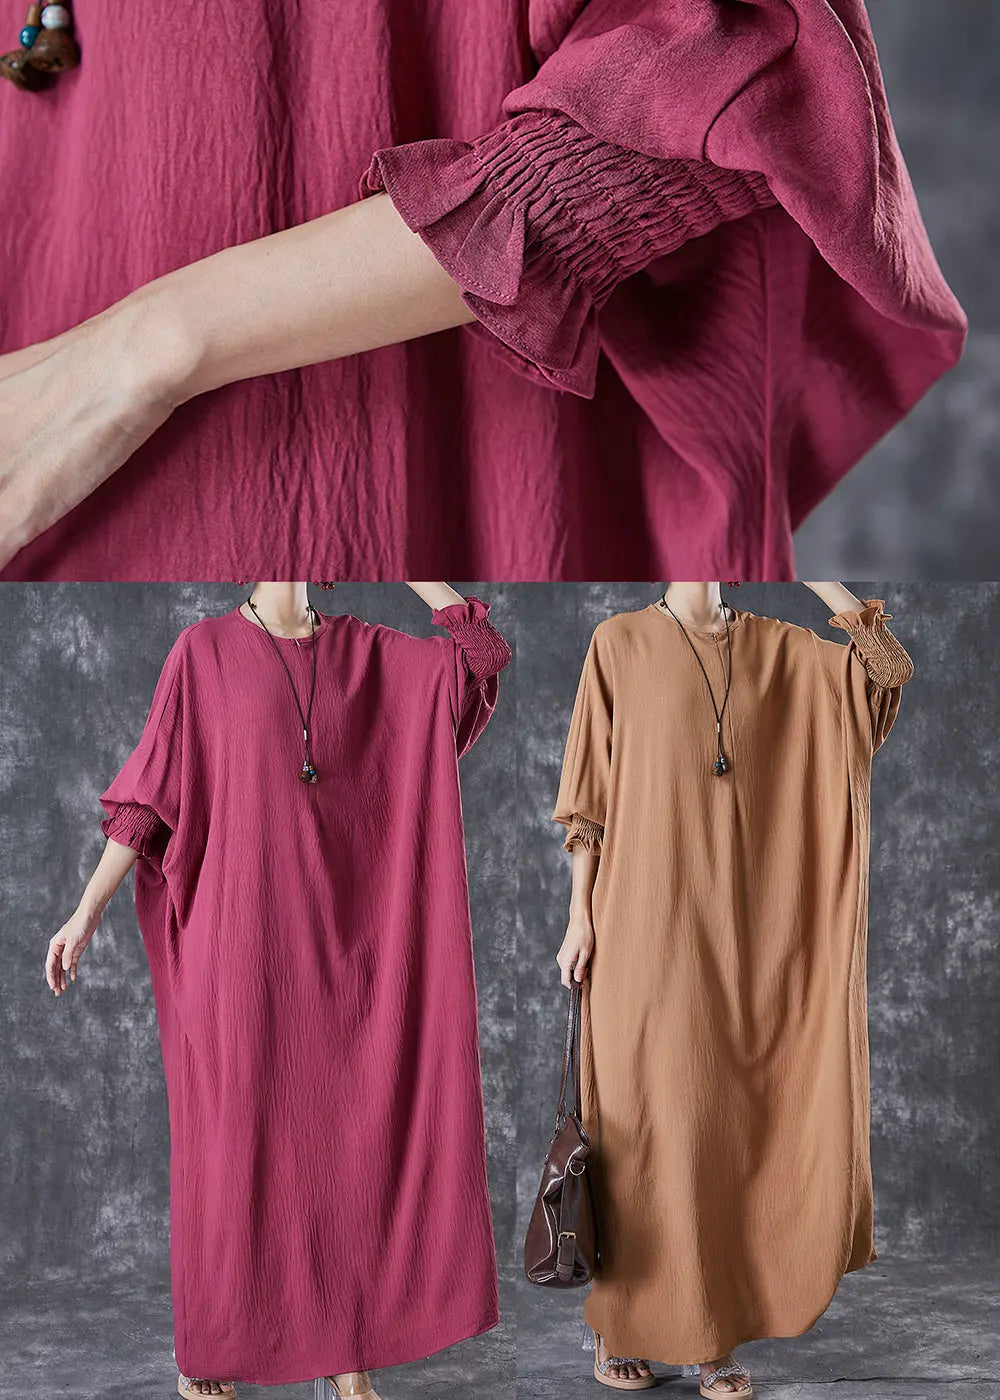 Khaki Cotton Holiday Dress Oversized Batwing Sleeve Ada Fashion